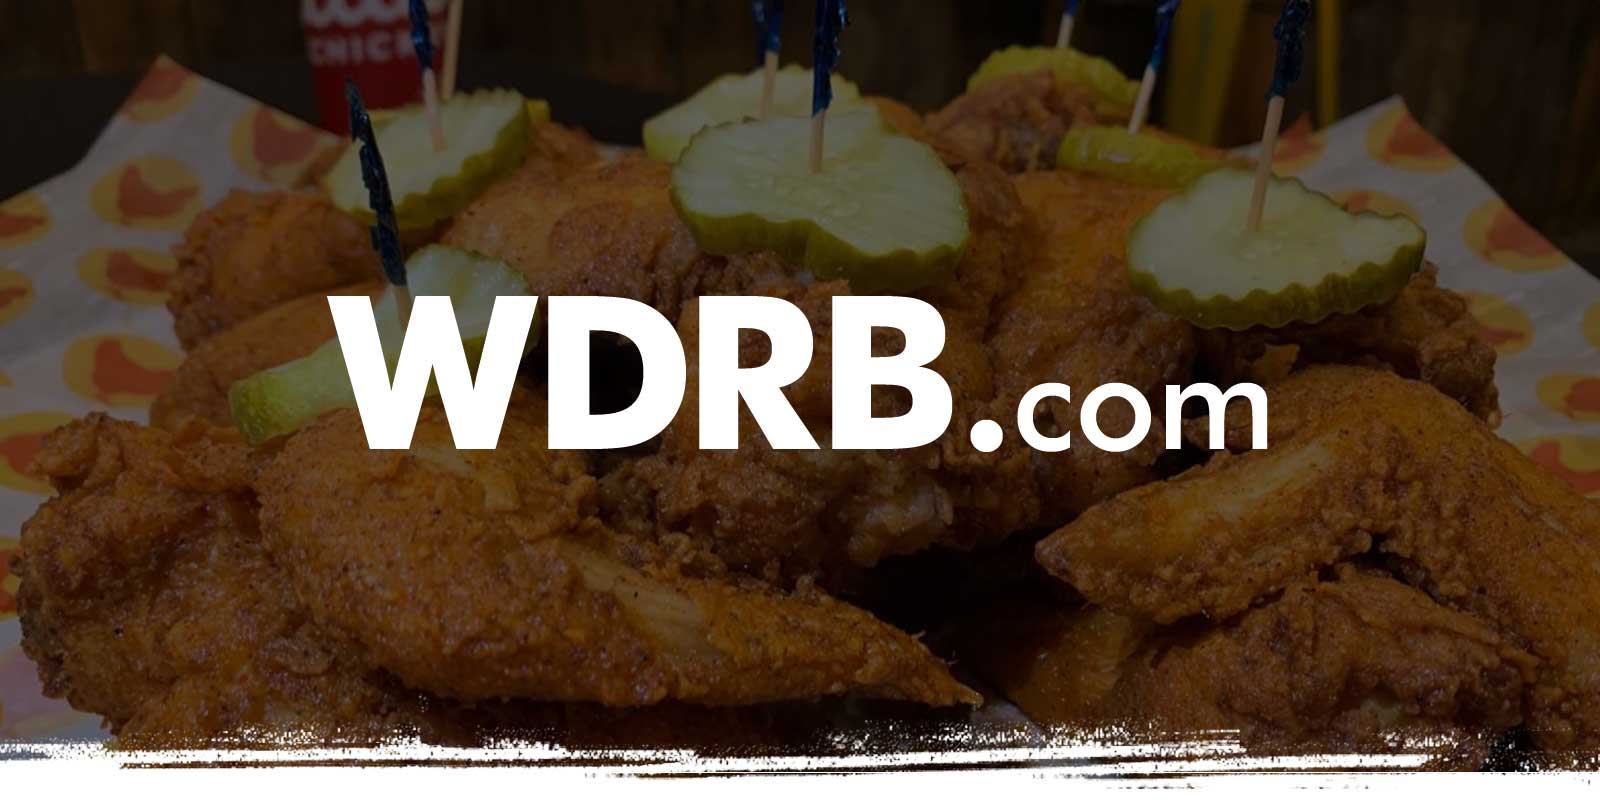 WDRB.com logo on large chicken tenders platter